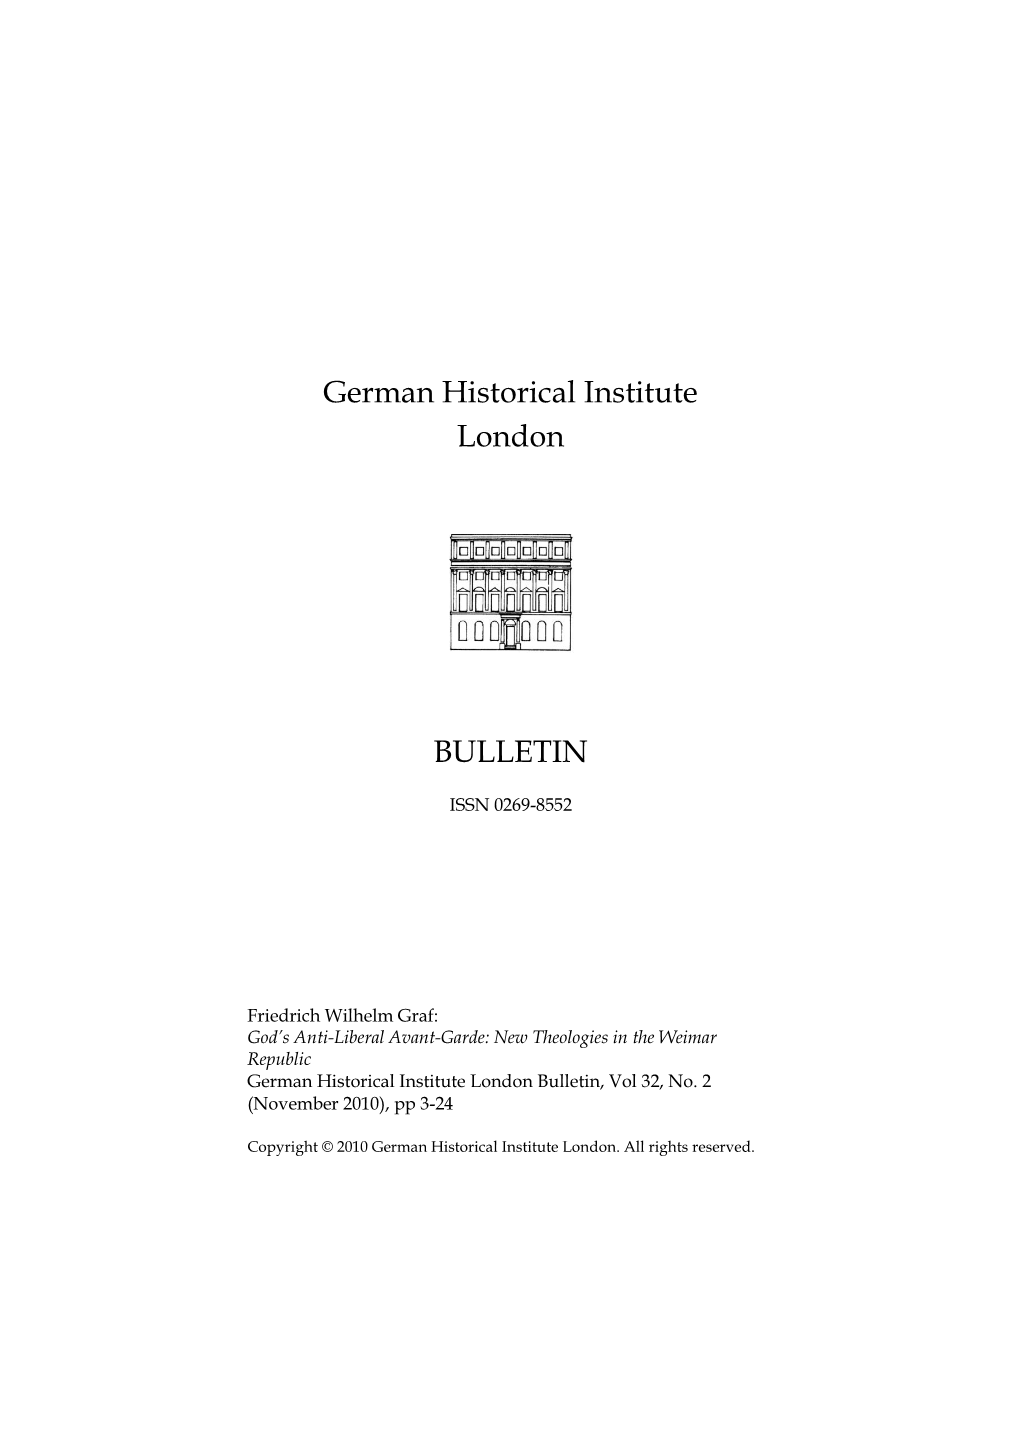 German Historical Institute London Bulletin, Vol 32, No